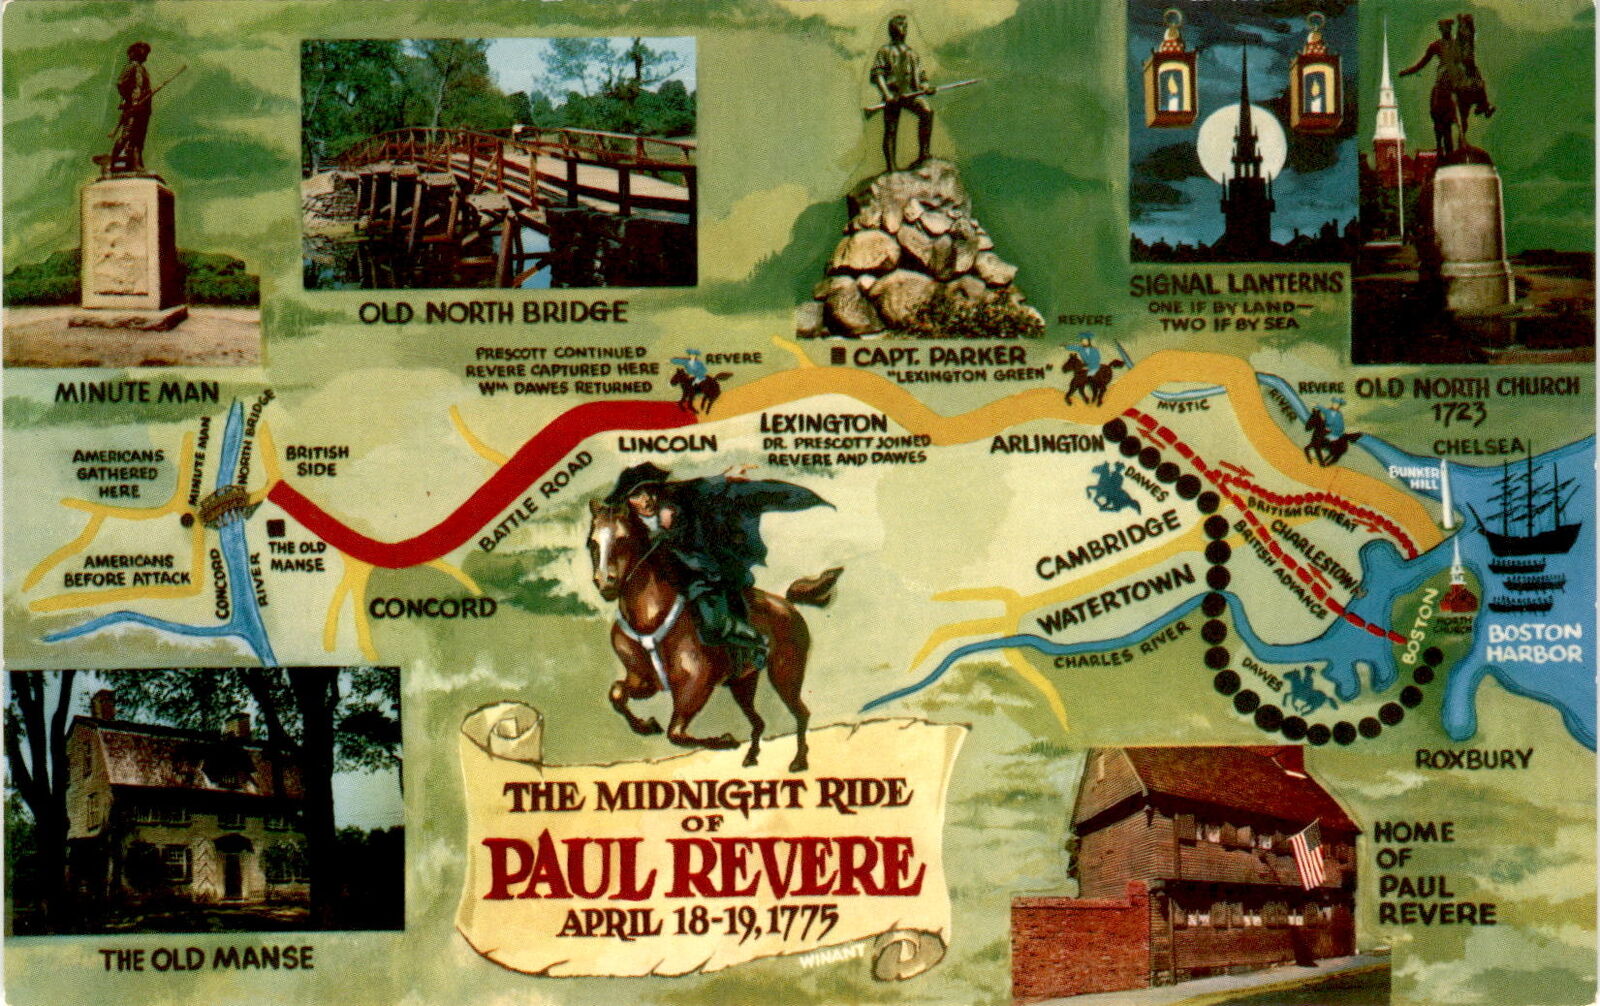 Paul Revere, William Dawes, Samuel Prescott, Lexington, Concord, Postcard